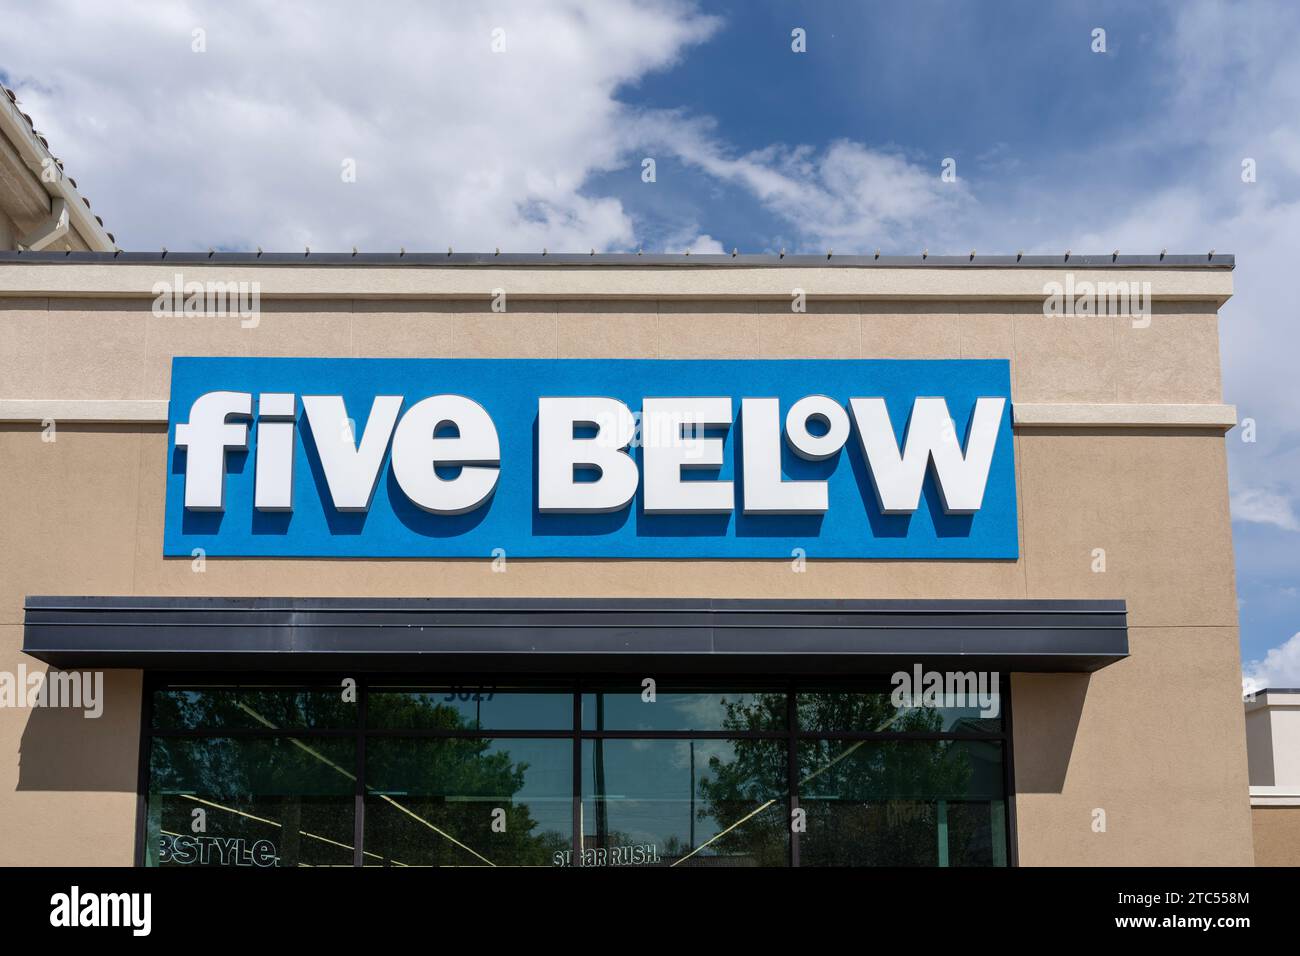 Closeup of five BELOW store logo sign on the building in Salt Lake City  Utah, USA Stock Photo